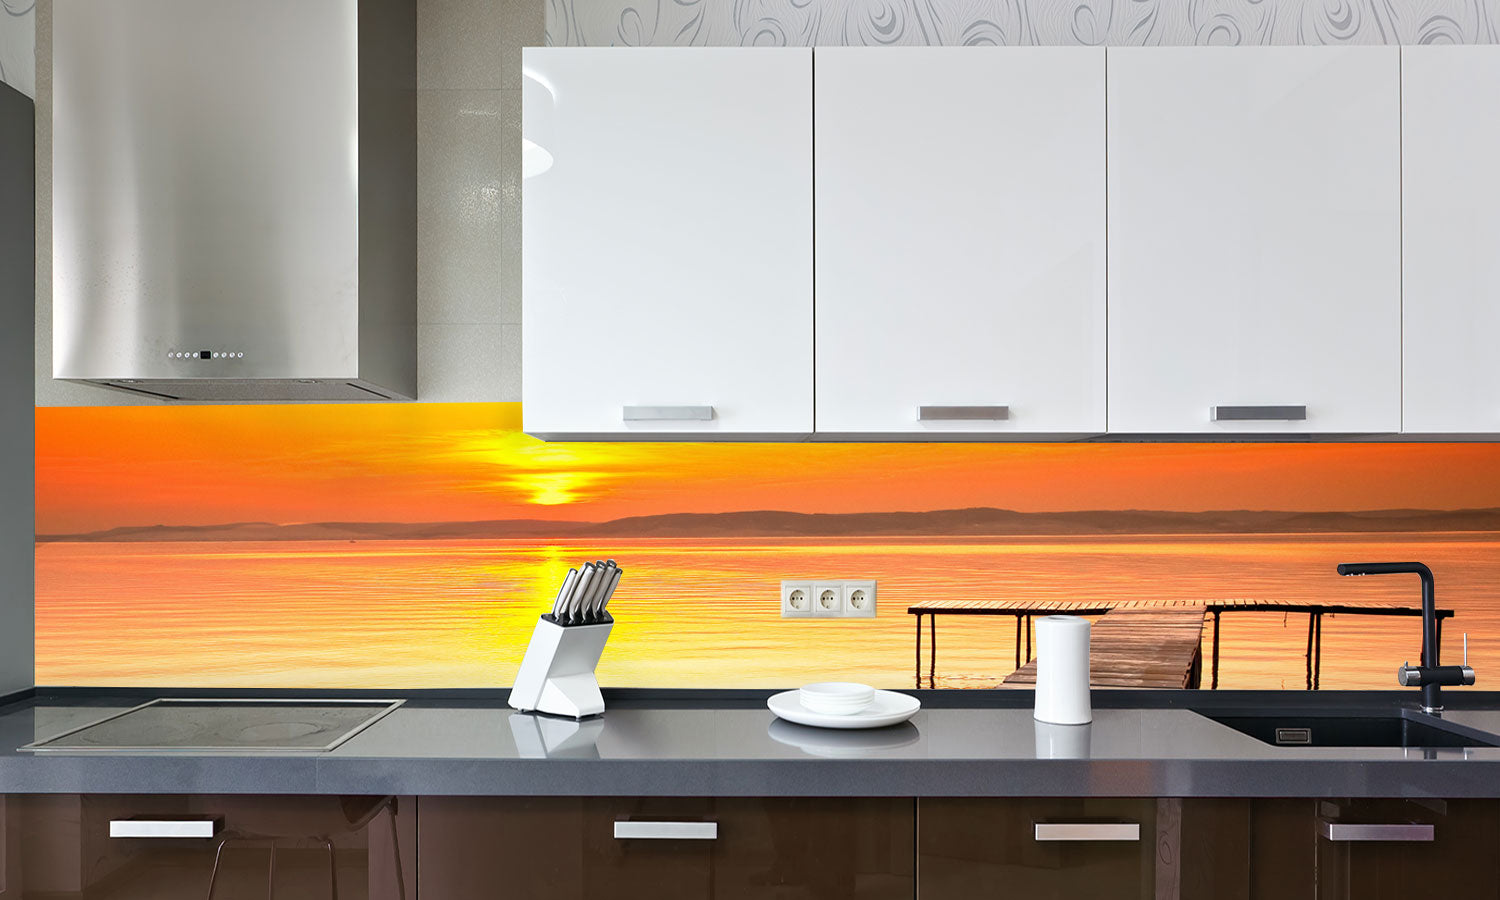 Paneli za kuhinje Lake Balaton -  Stakleni / PVC ploče / Pleksiglas -  sa printom za kuhinju, Zidne obloge PKU202